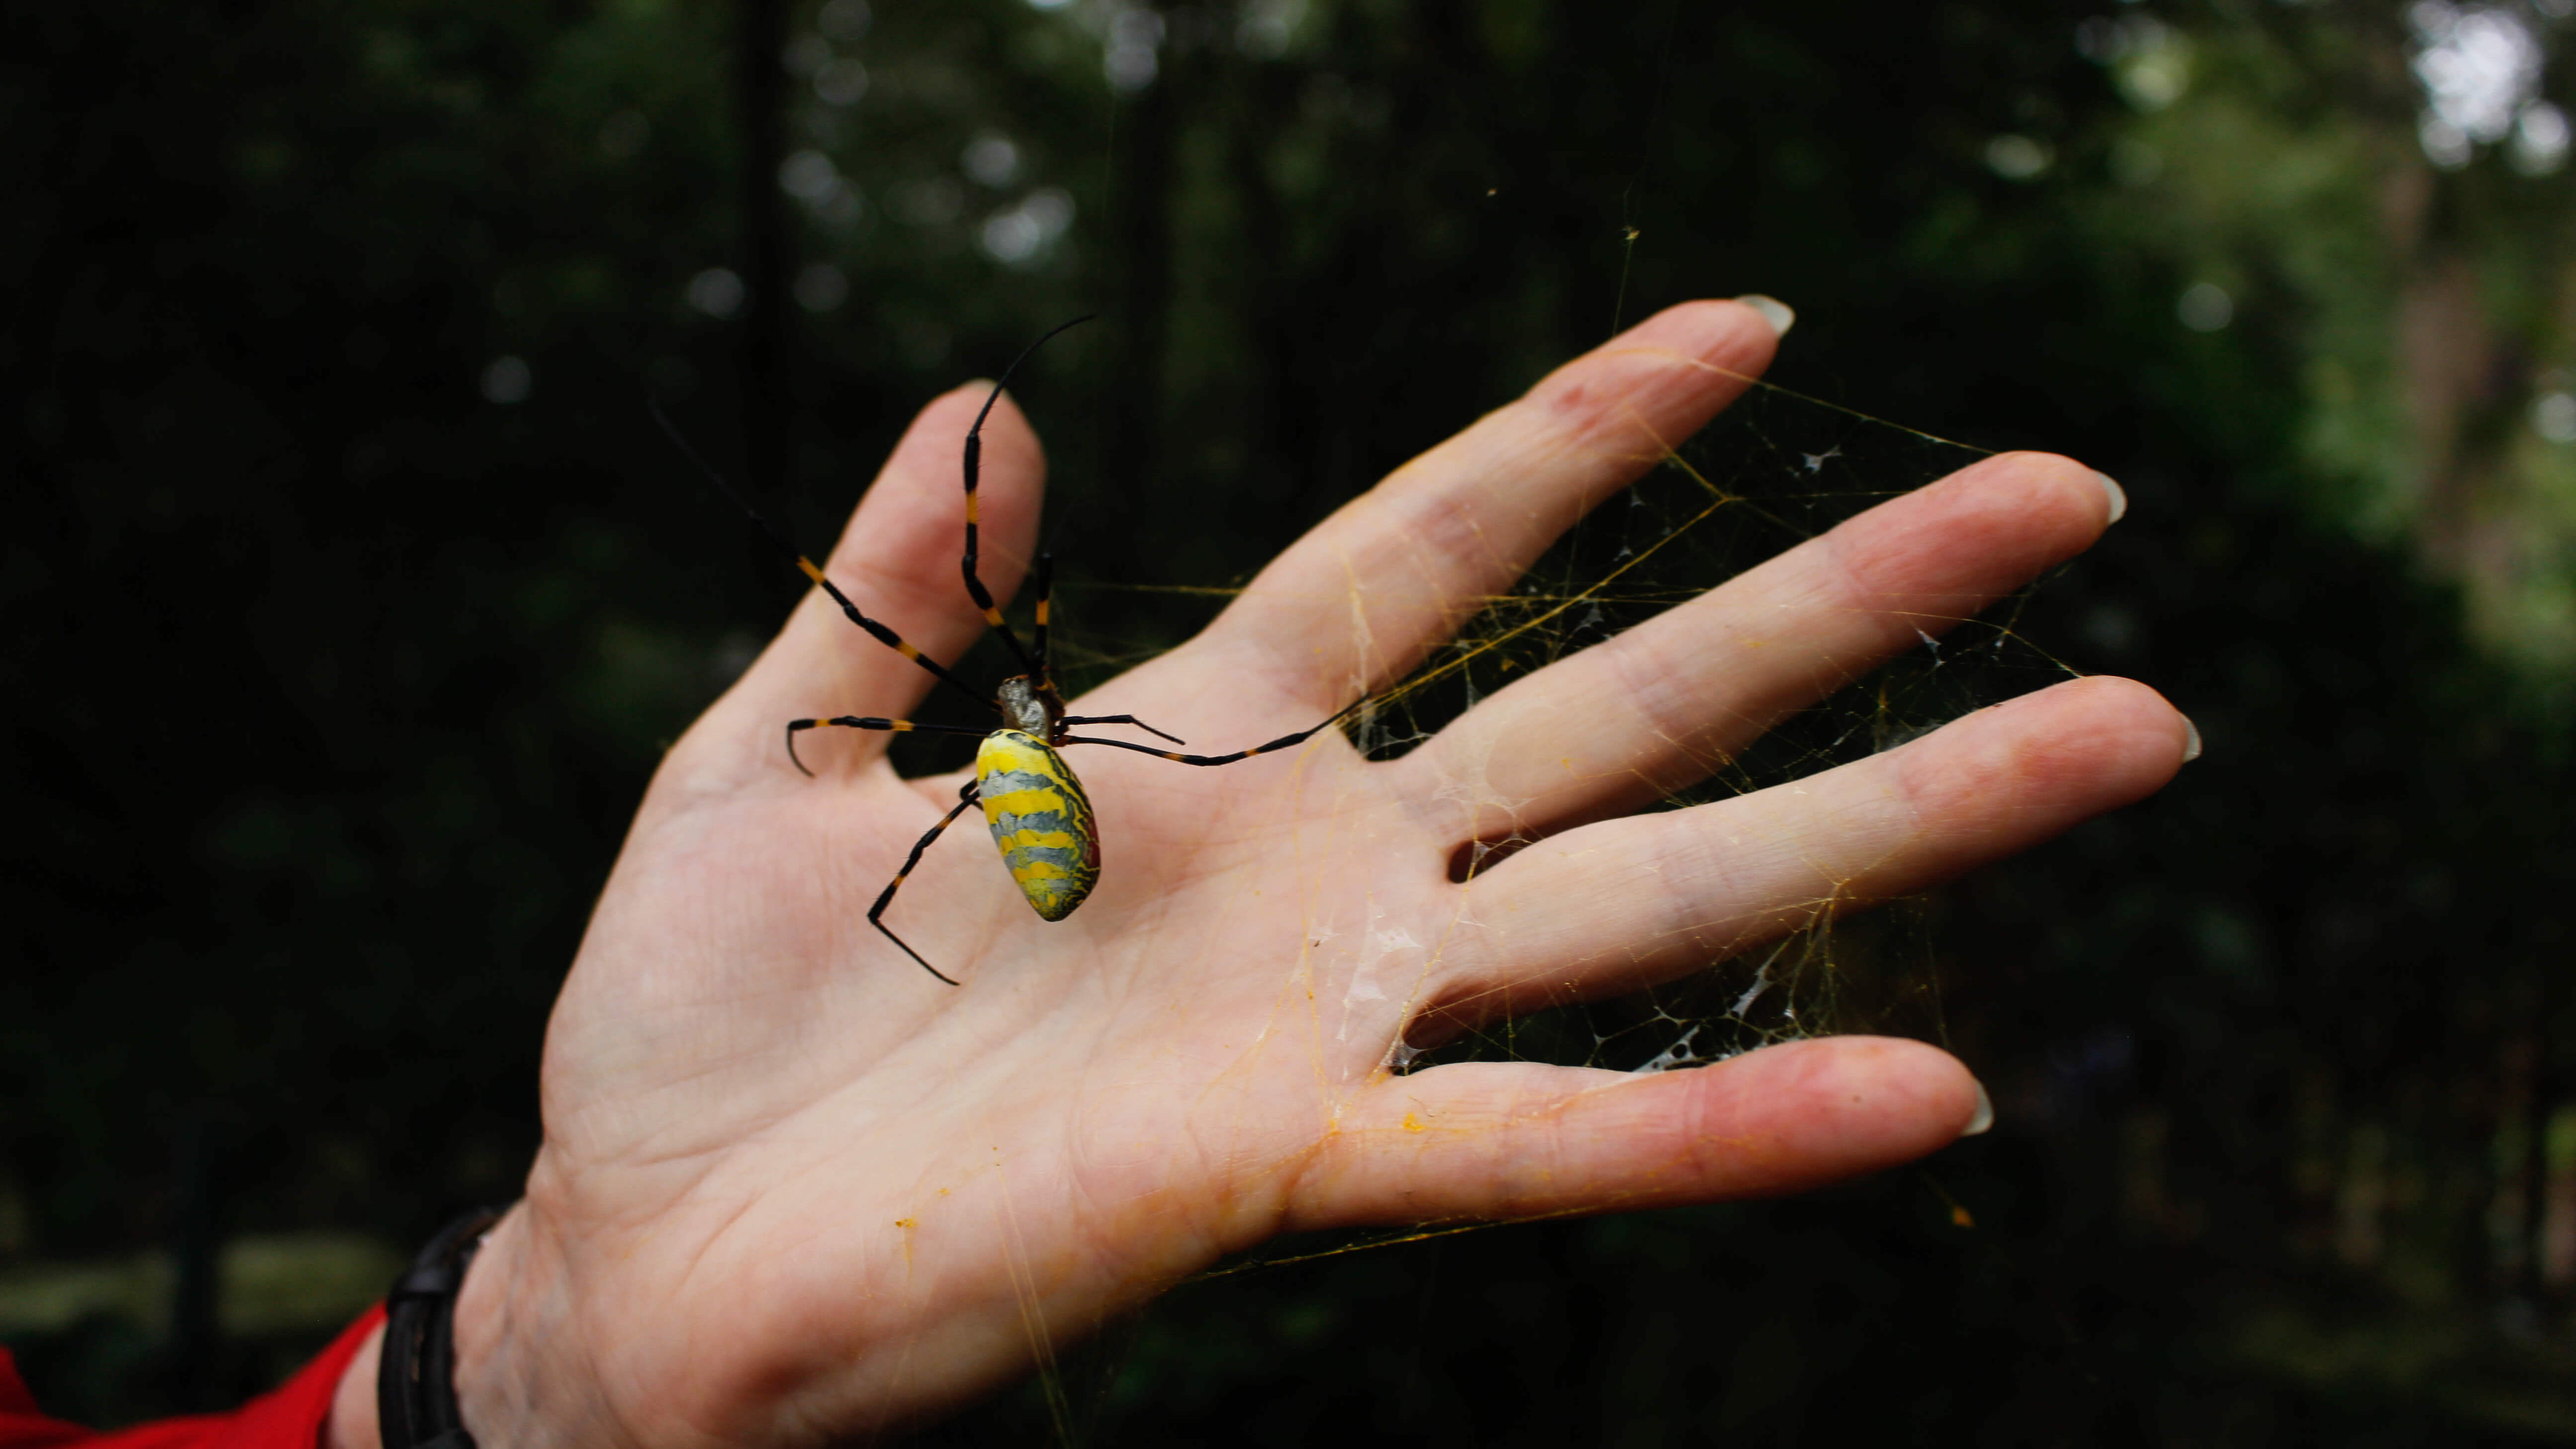 Invasive spider species makes 1st U.S. appearance